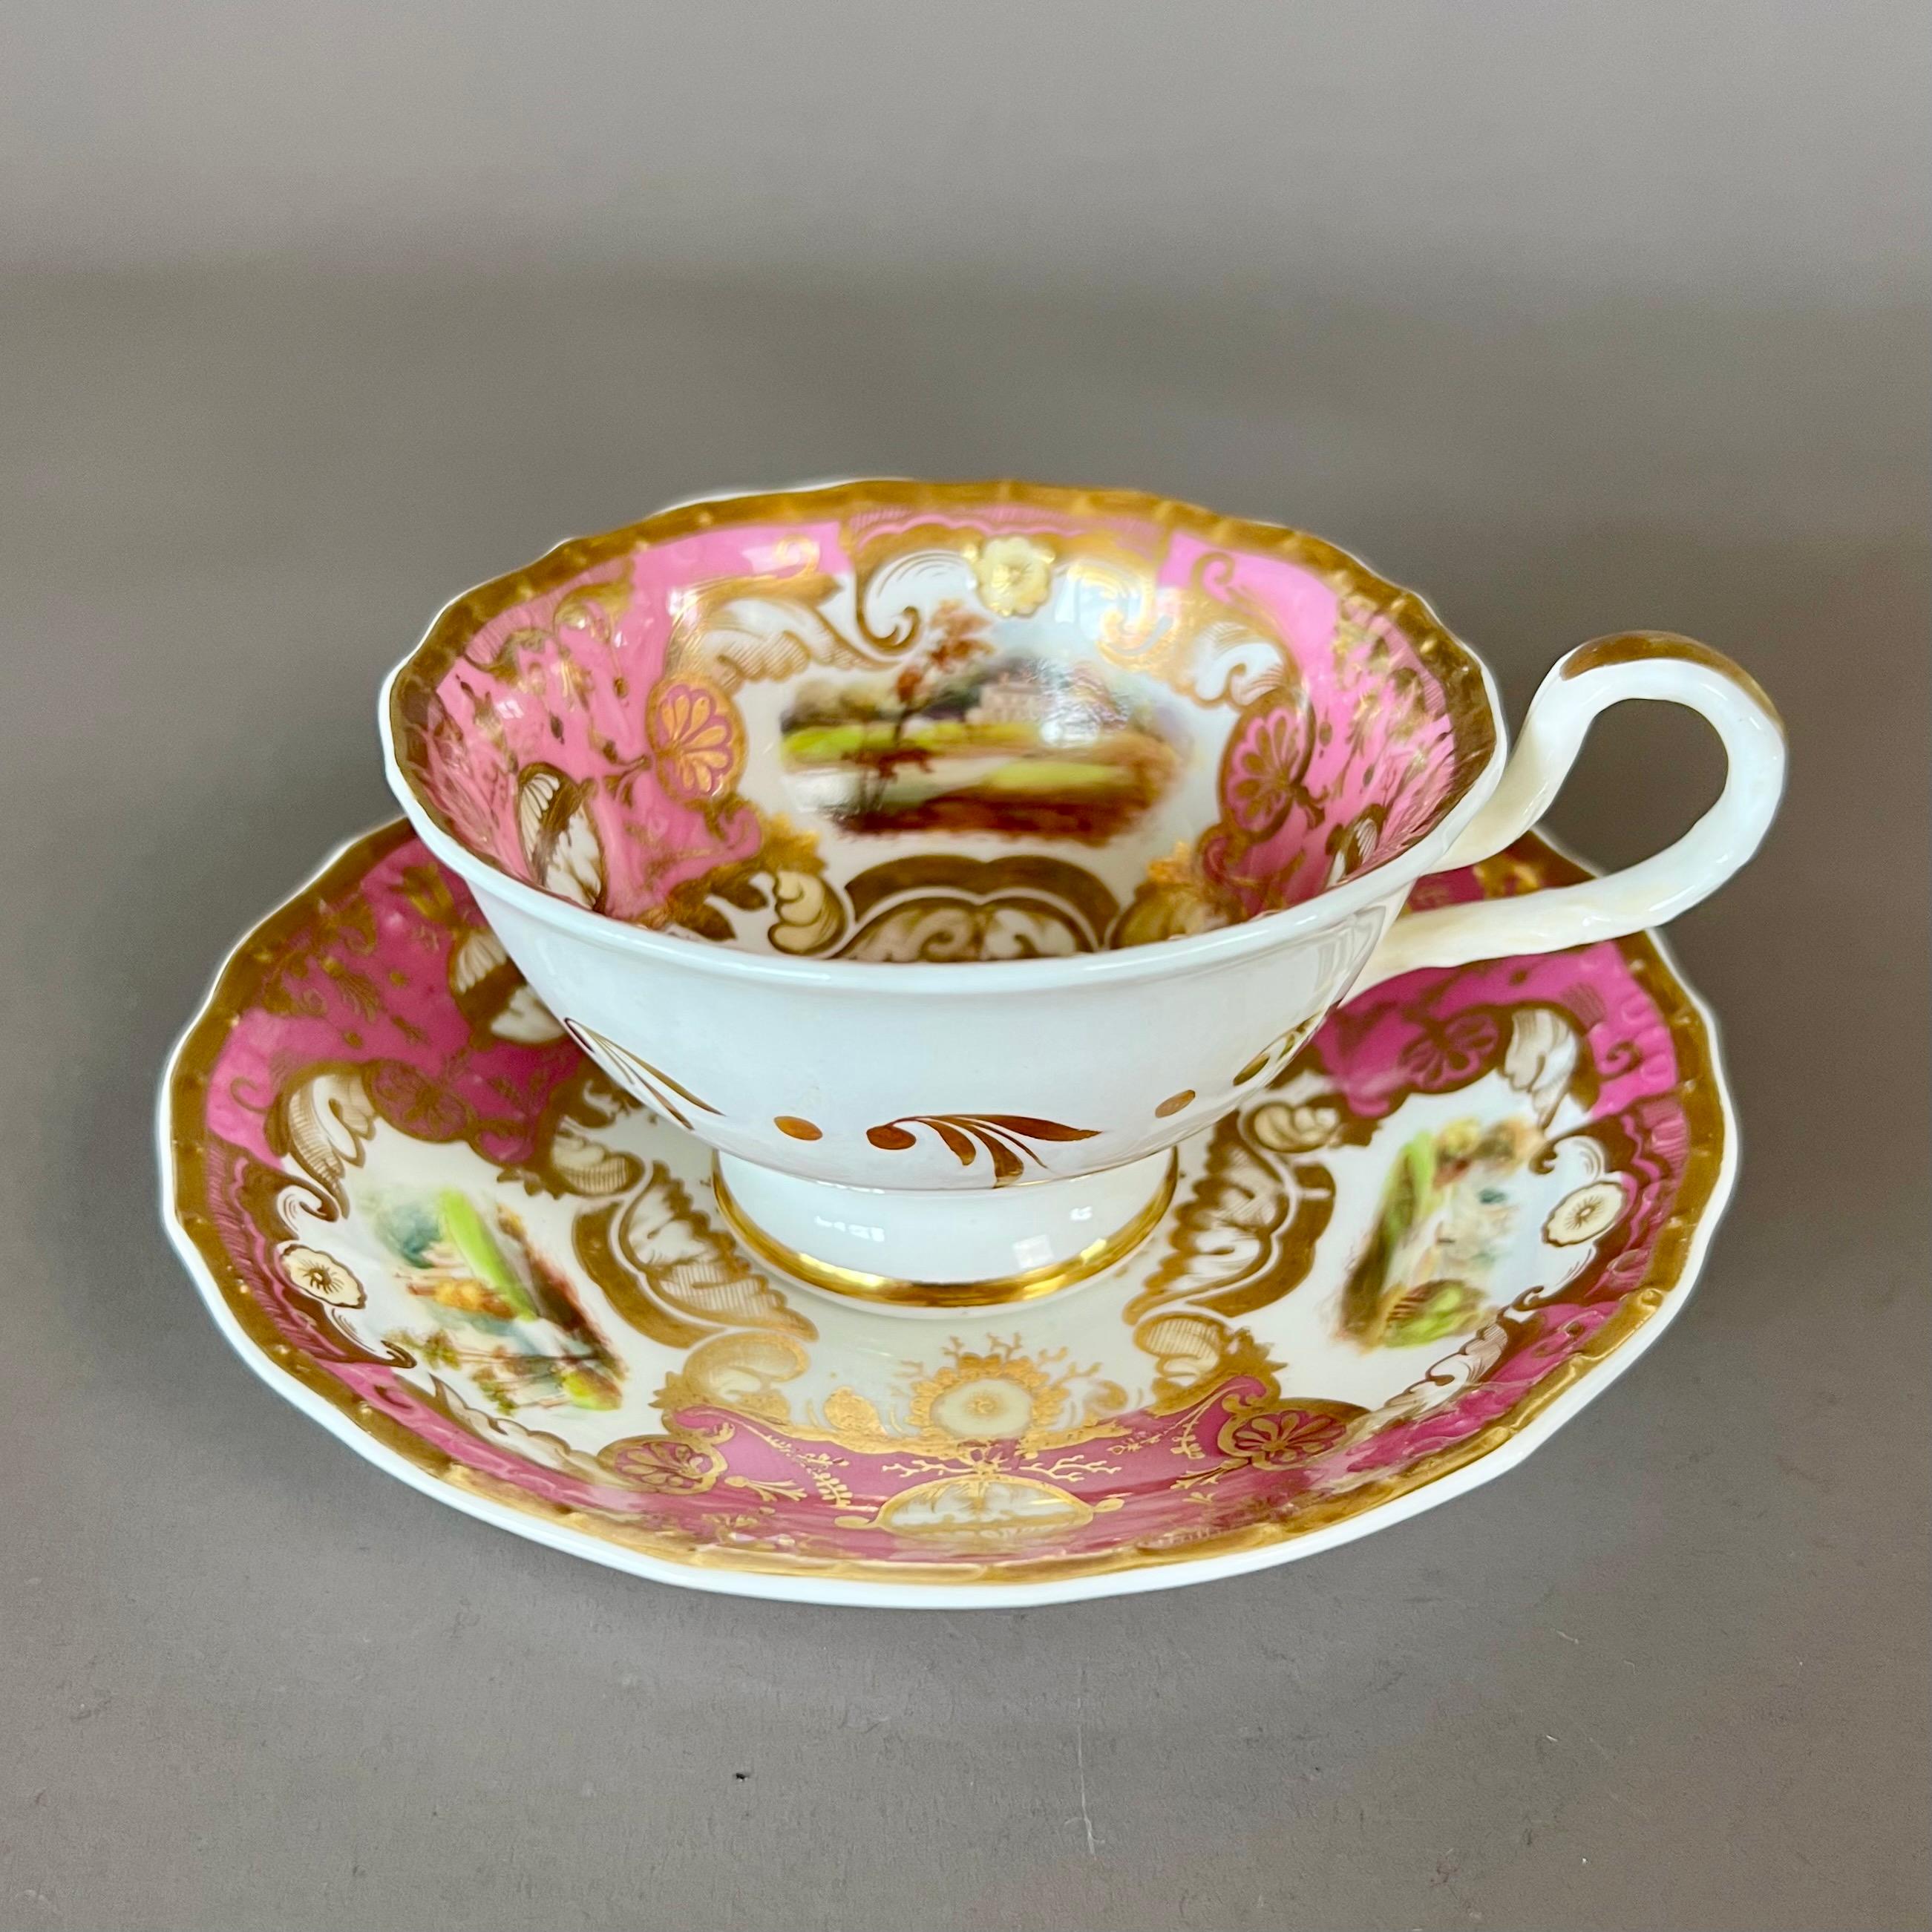 Rococo Revival Samuel Alcock Porcelain Teacup Trio, Pink, Gilt and Sublime Landscapes, ca 1827